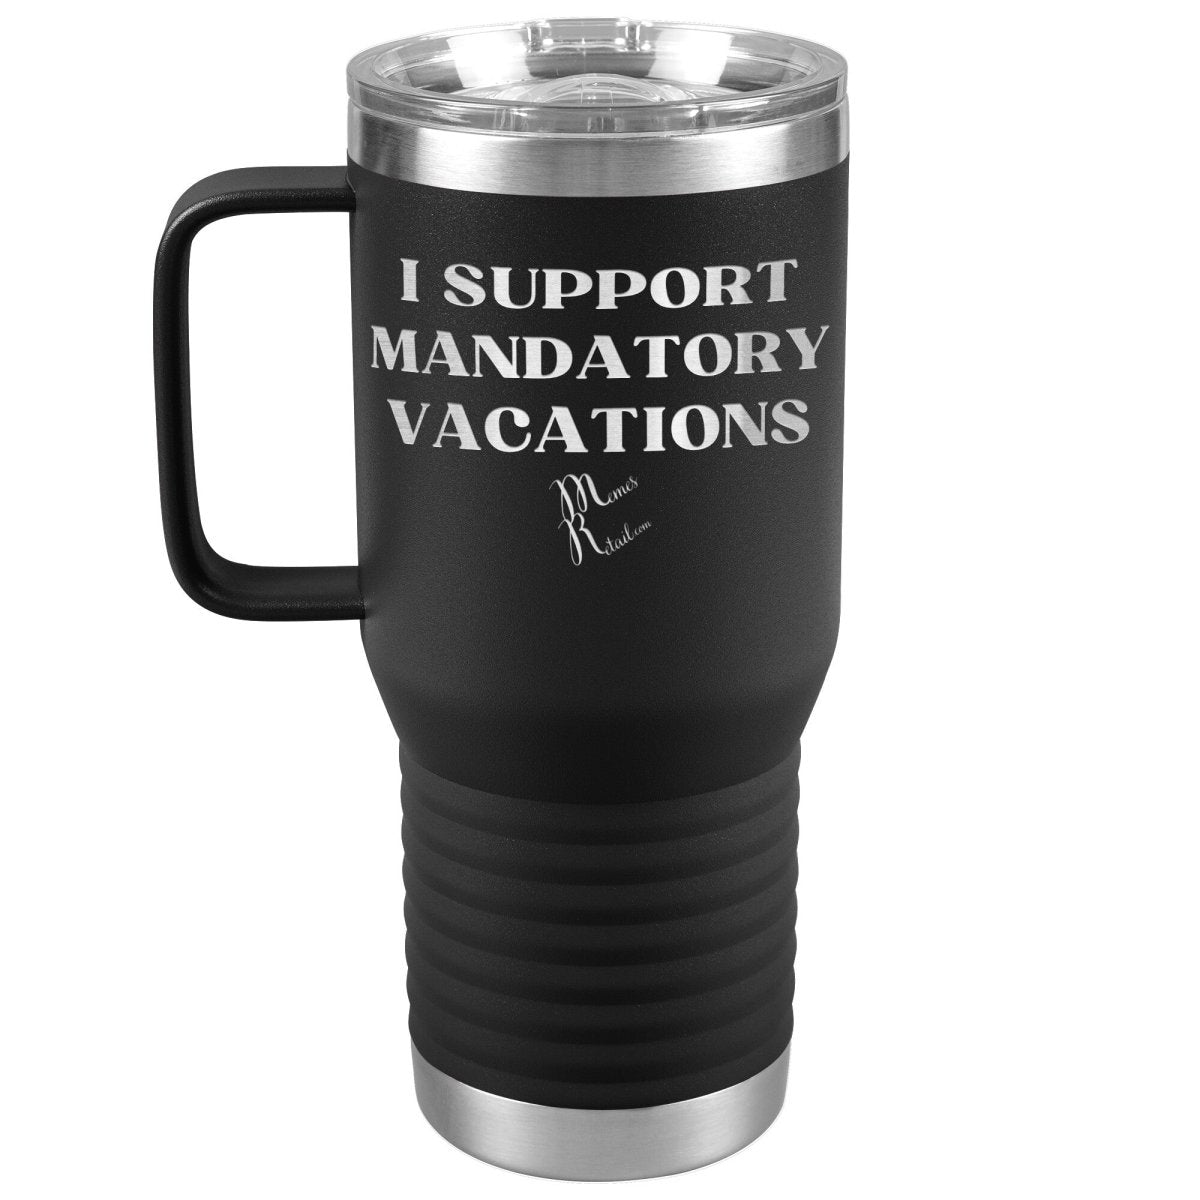 I support mandatory vacations Tumblers, 20oz Travel Tumbler / Black - MemesRetail.com